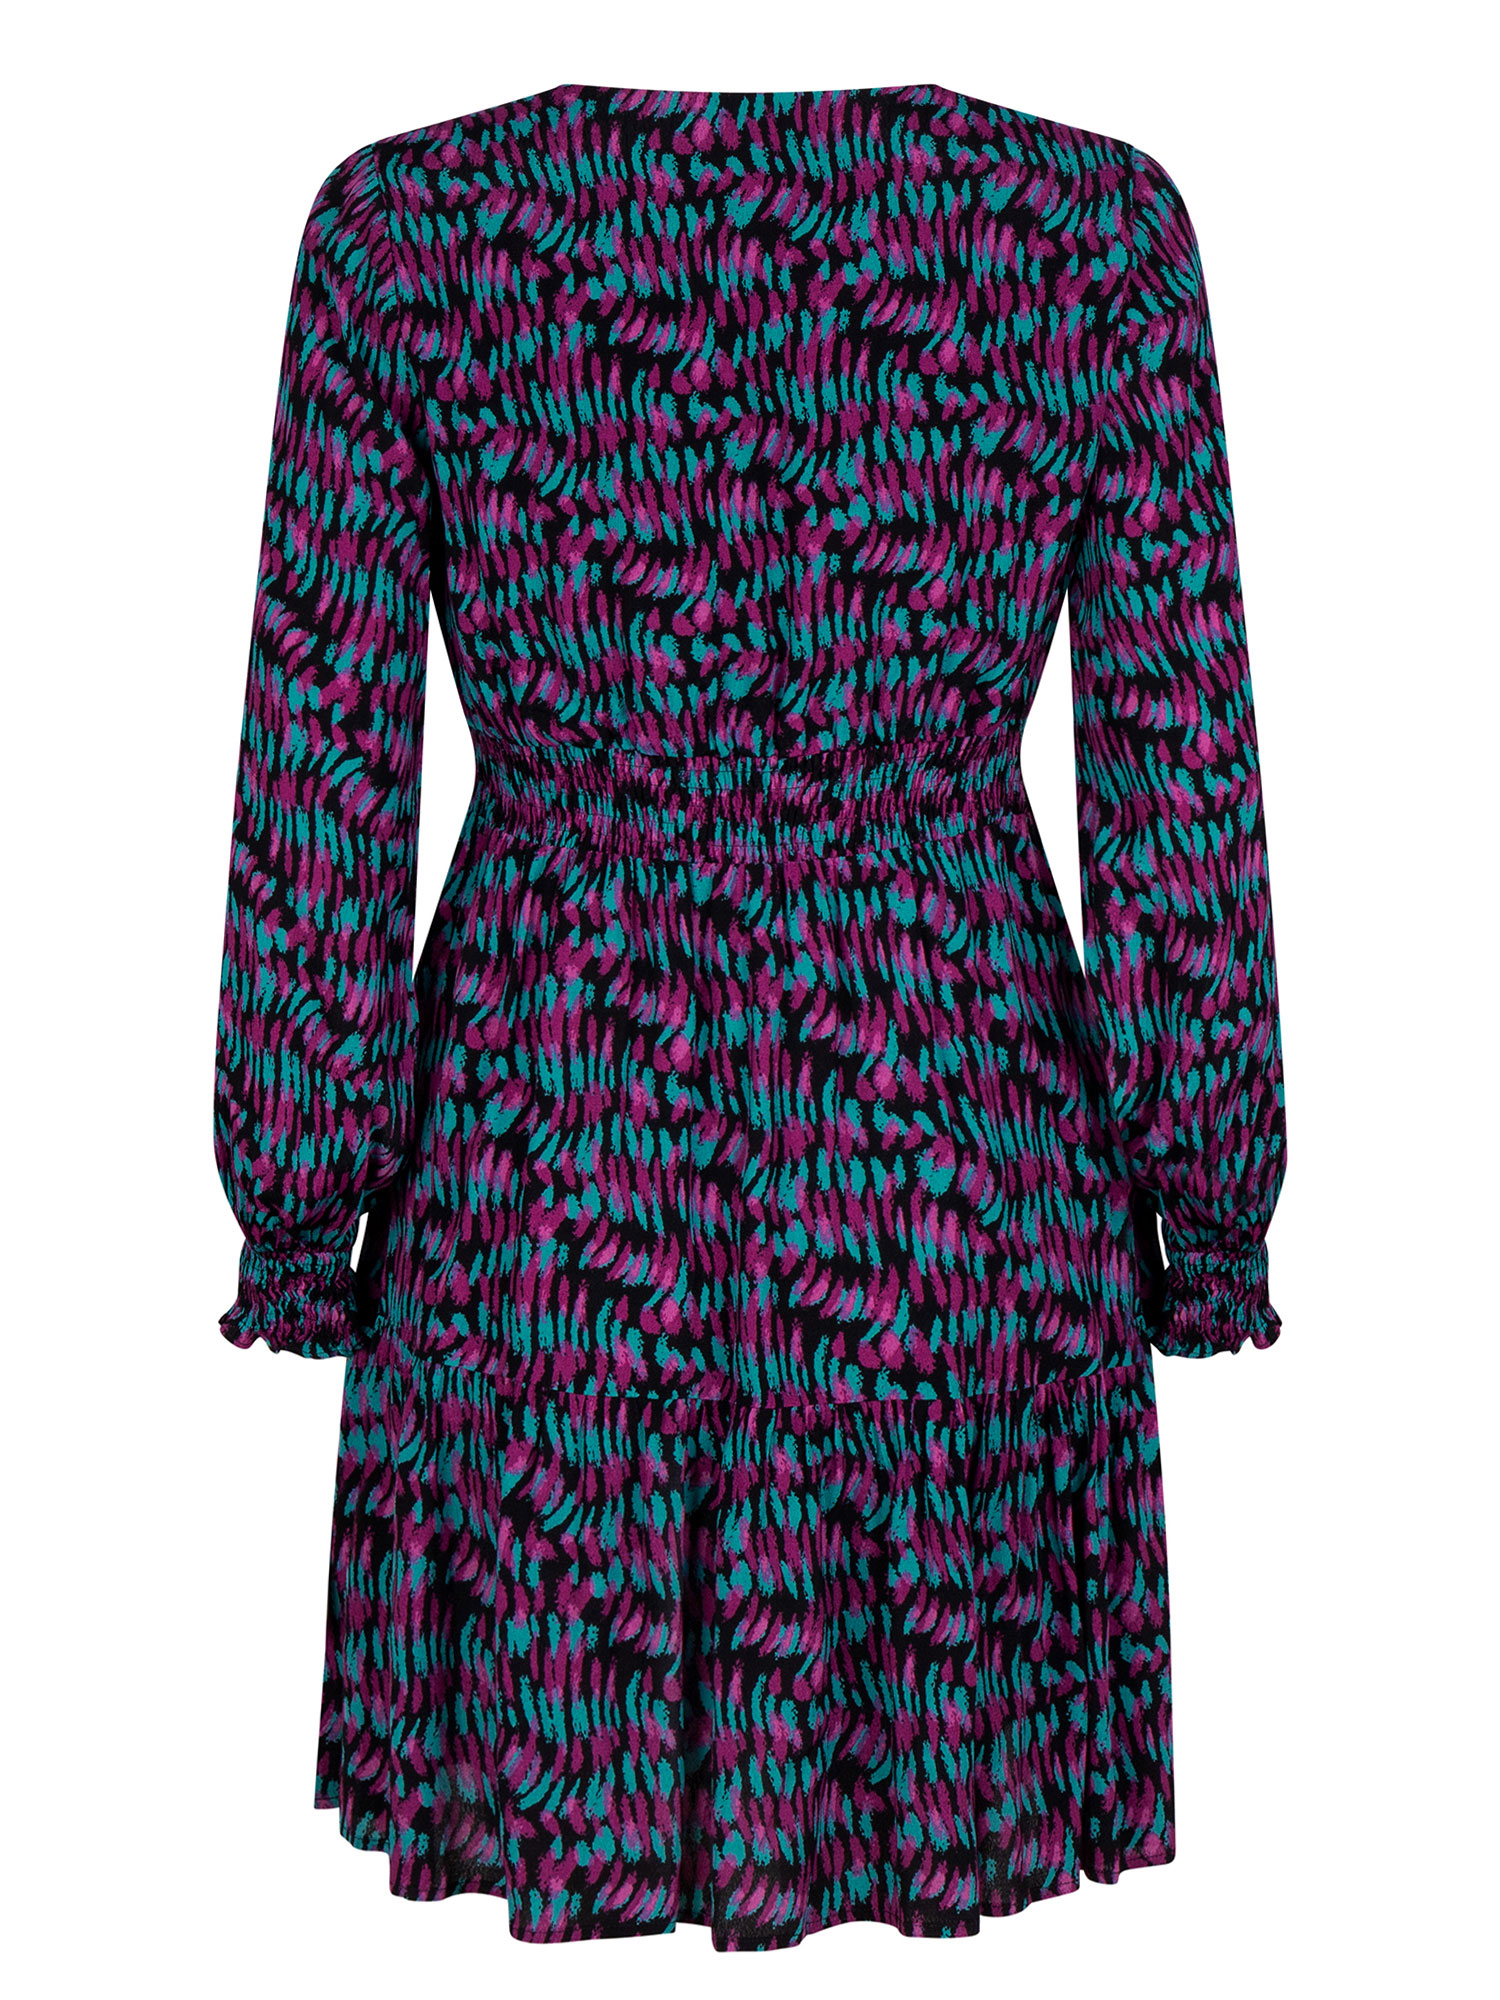 Ydence Dress Novali Turquoise/purple print